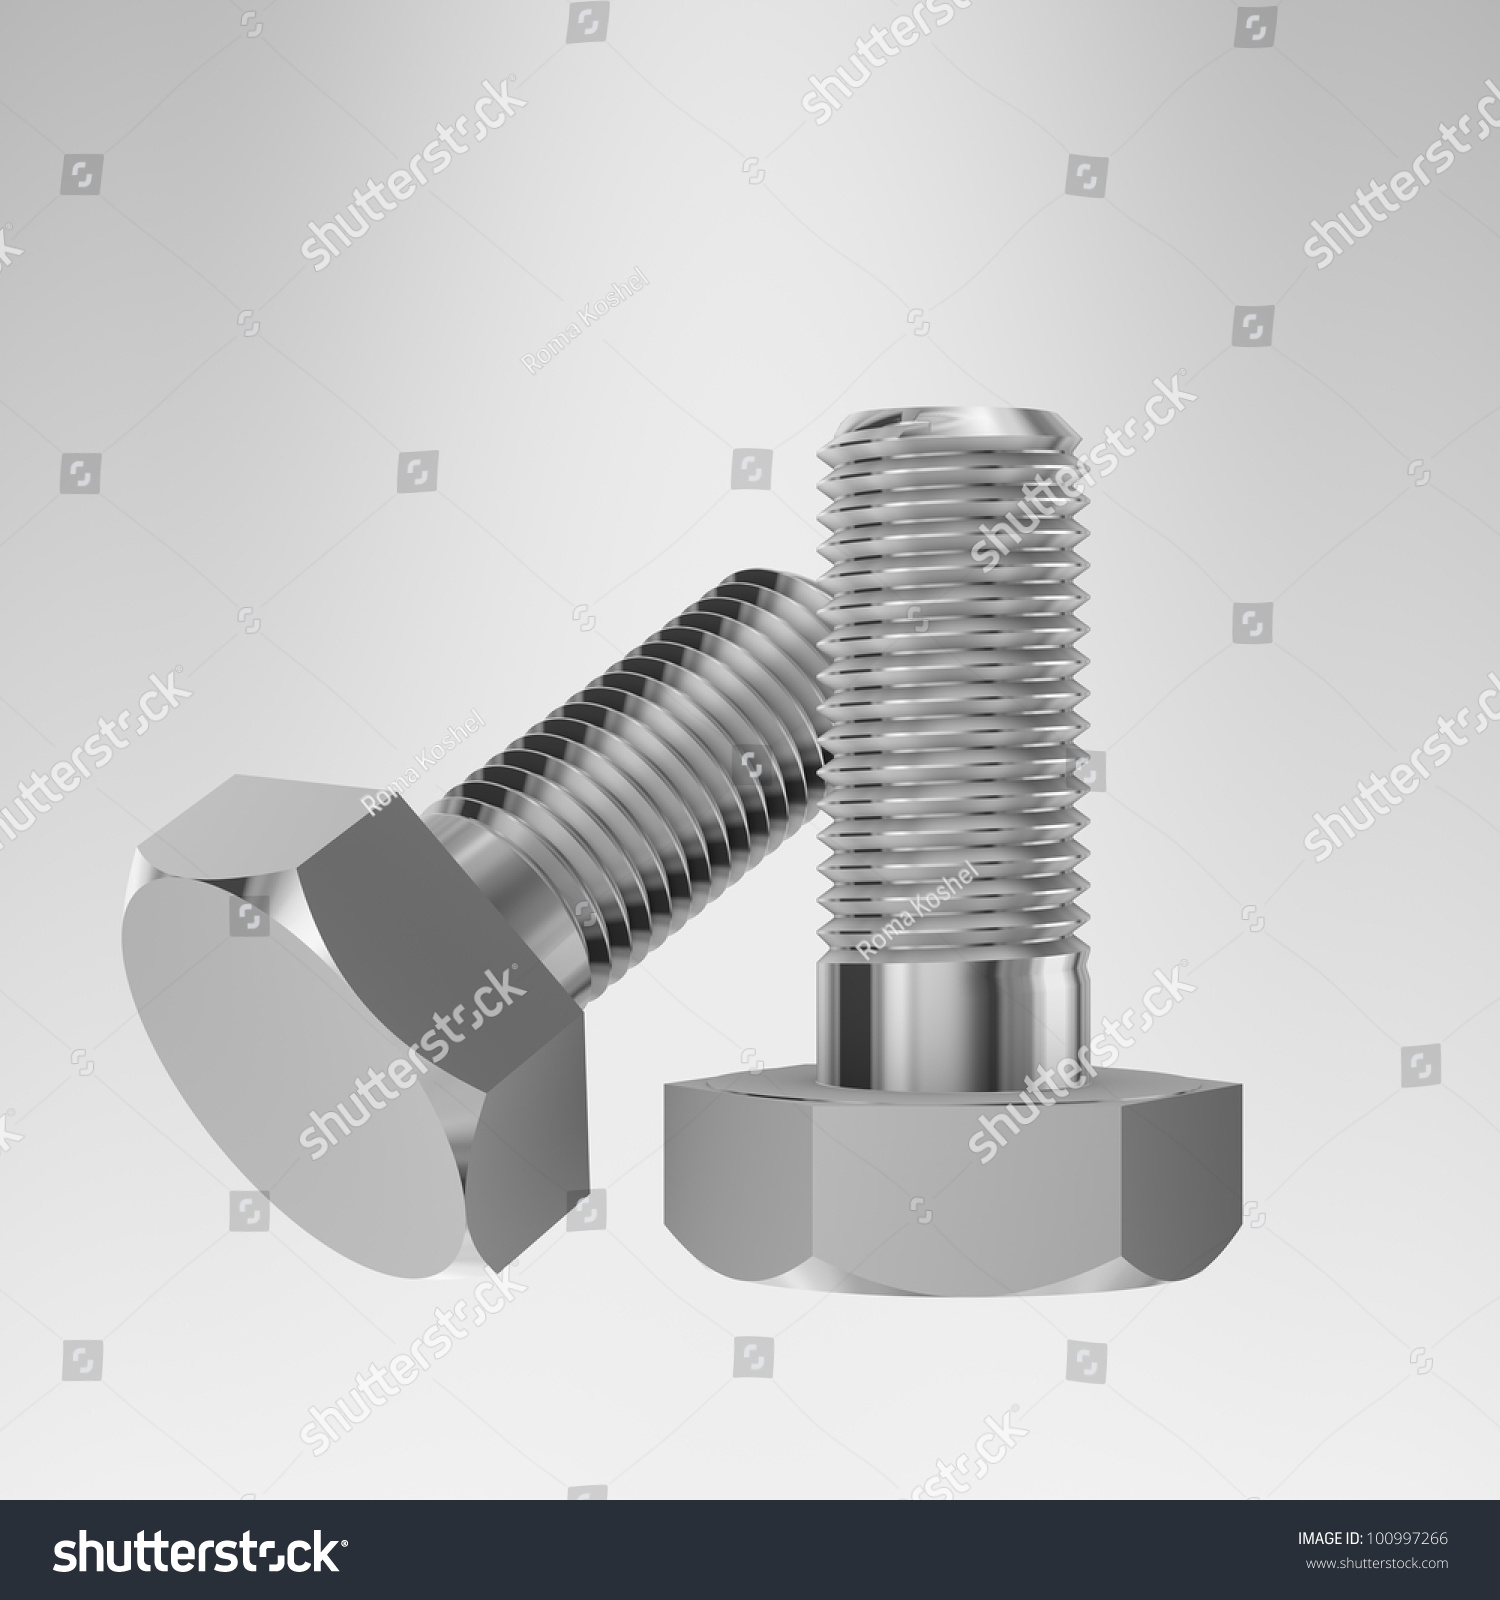 Metallic Bolts Stock Illustration 100997266 - Shutterstock